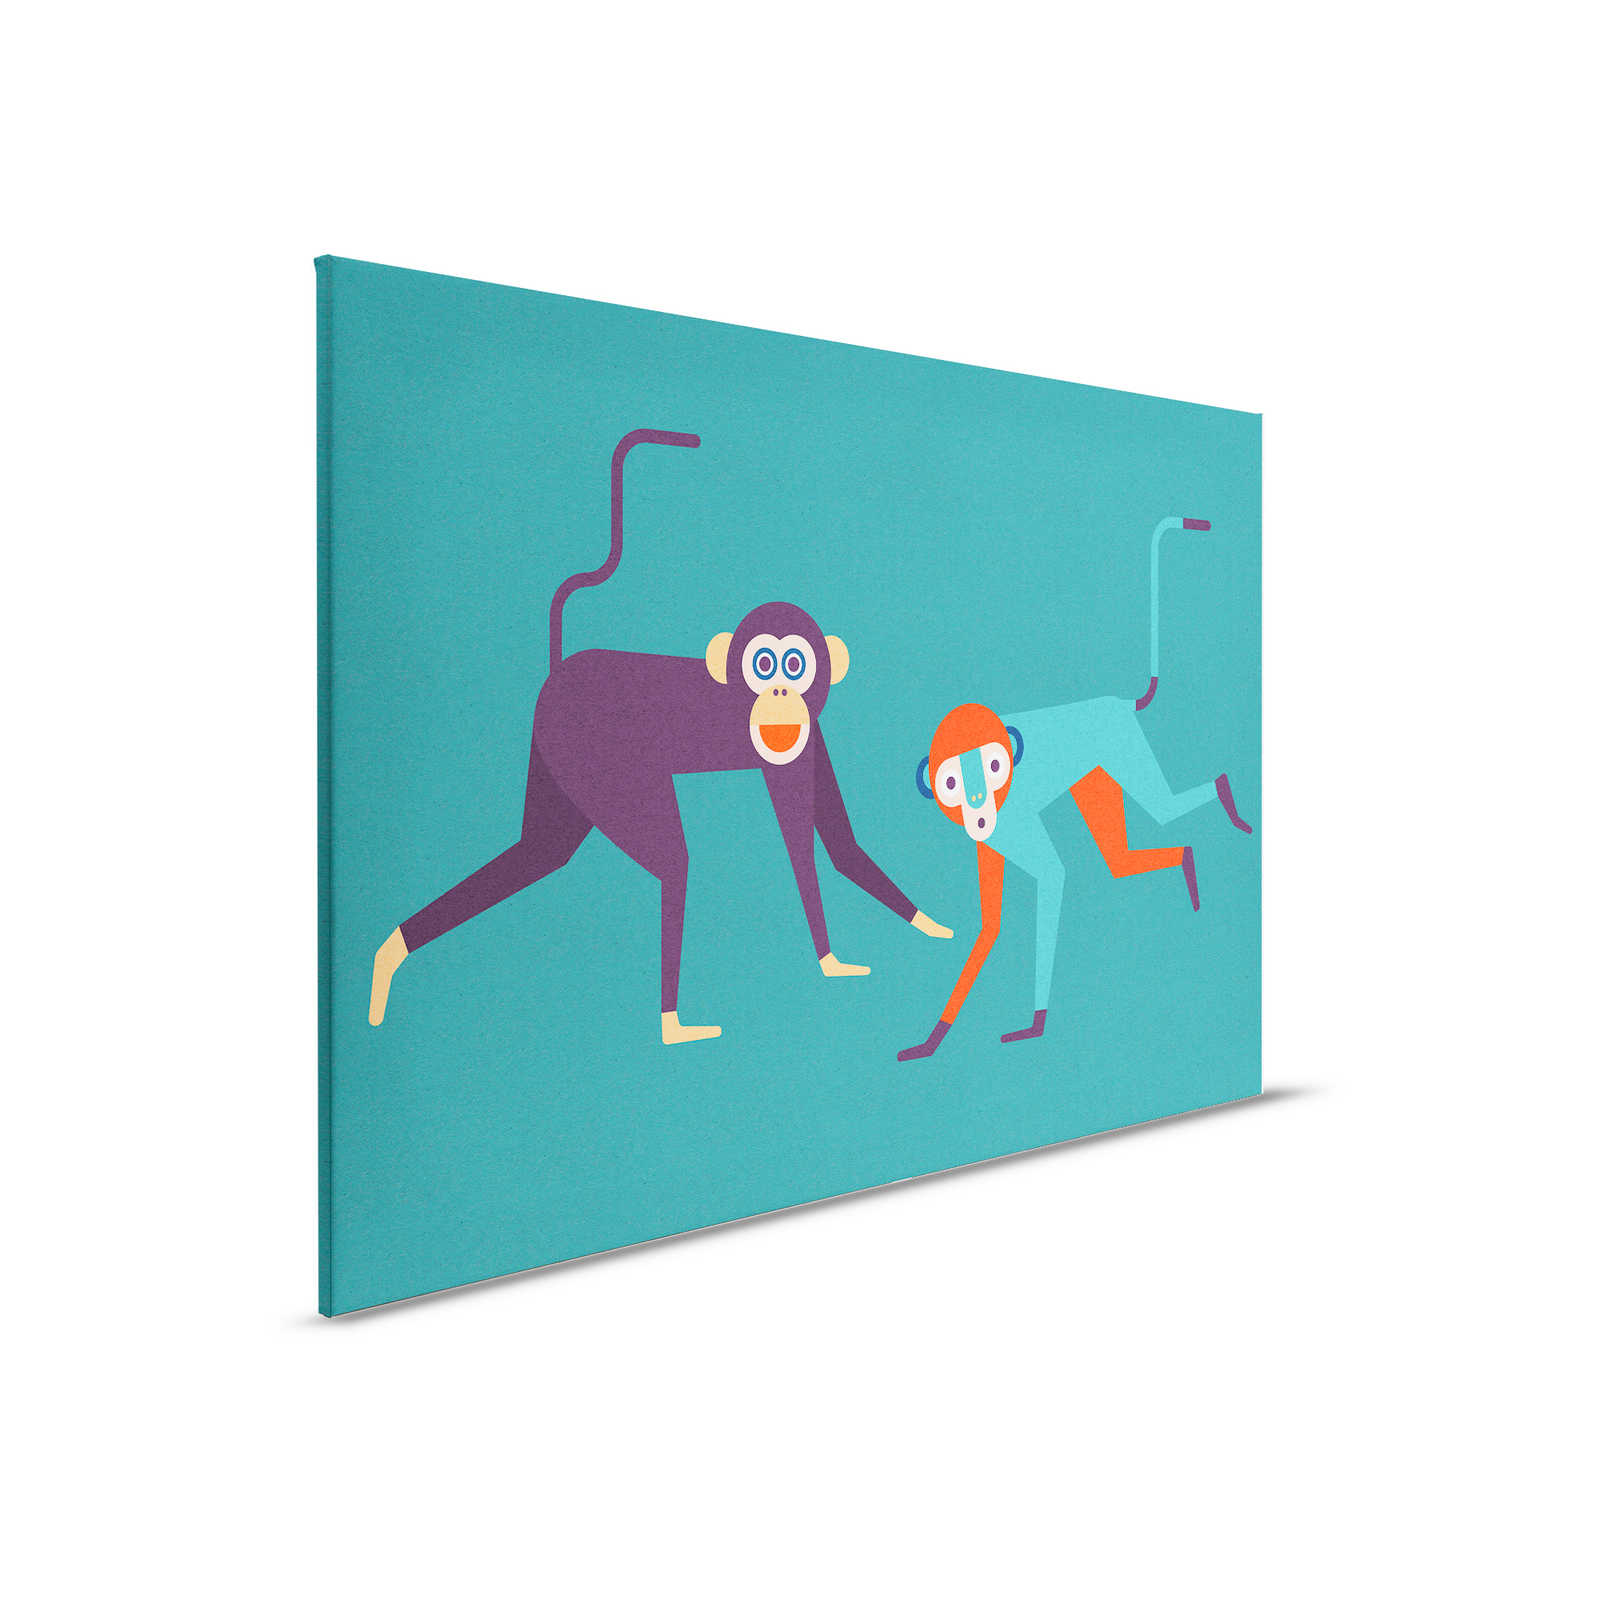         Monkey Business 1 - Leinwandbild in Pappe Struktur, Affen-Bande im Comic-Stil – 0,90 m x 0,60 m
    